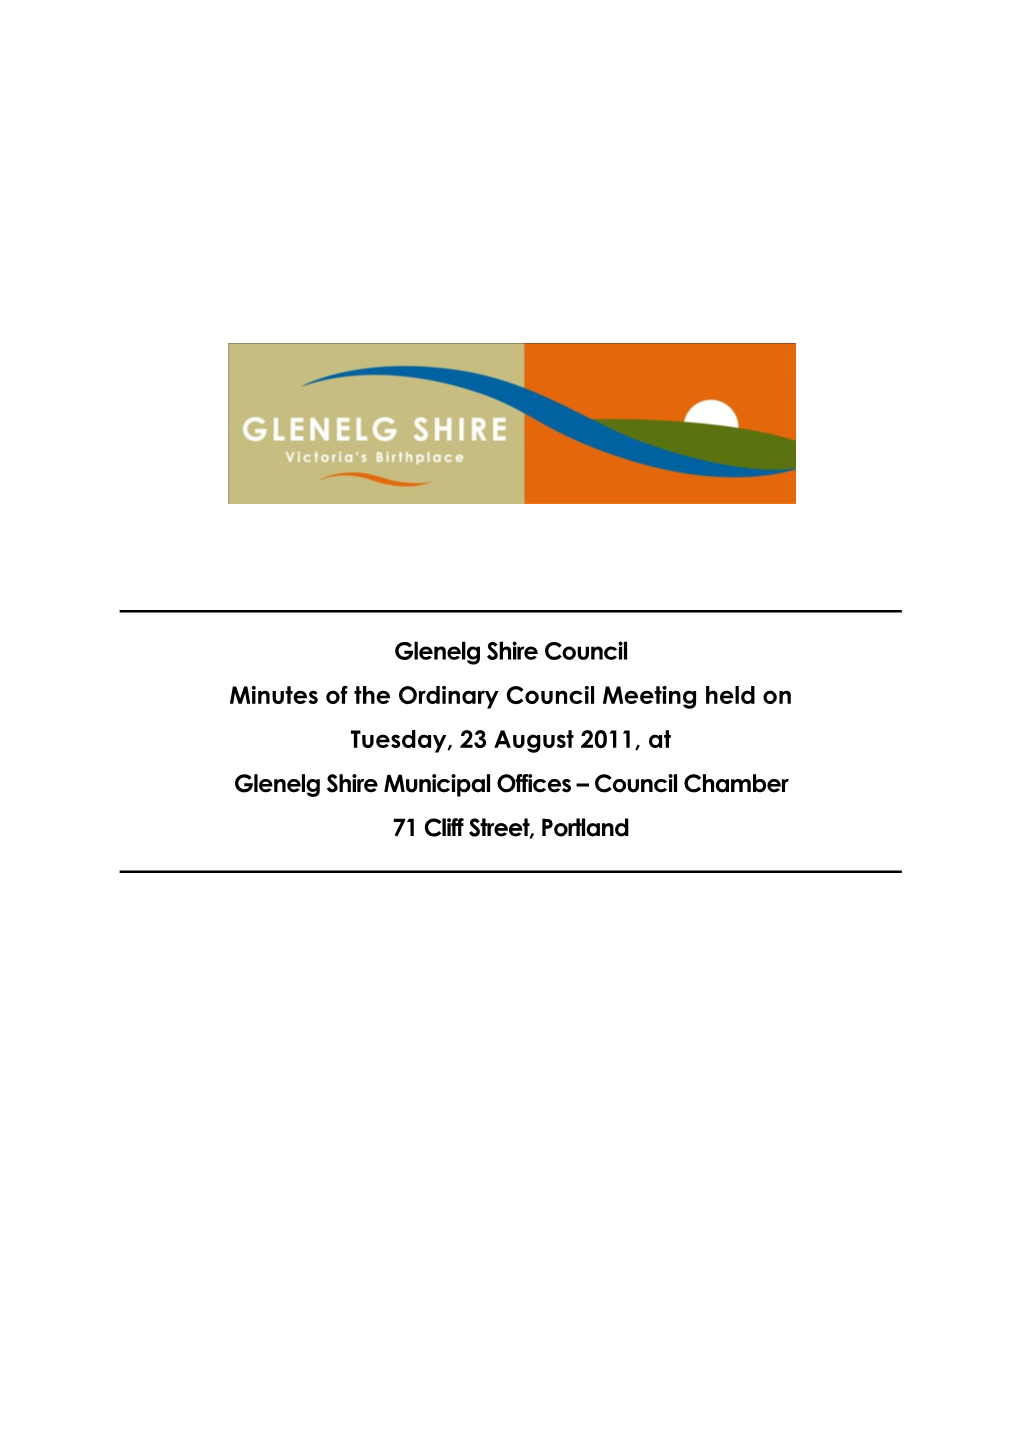 Glenelg Shire Council 1998/99